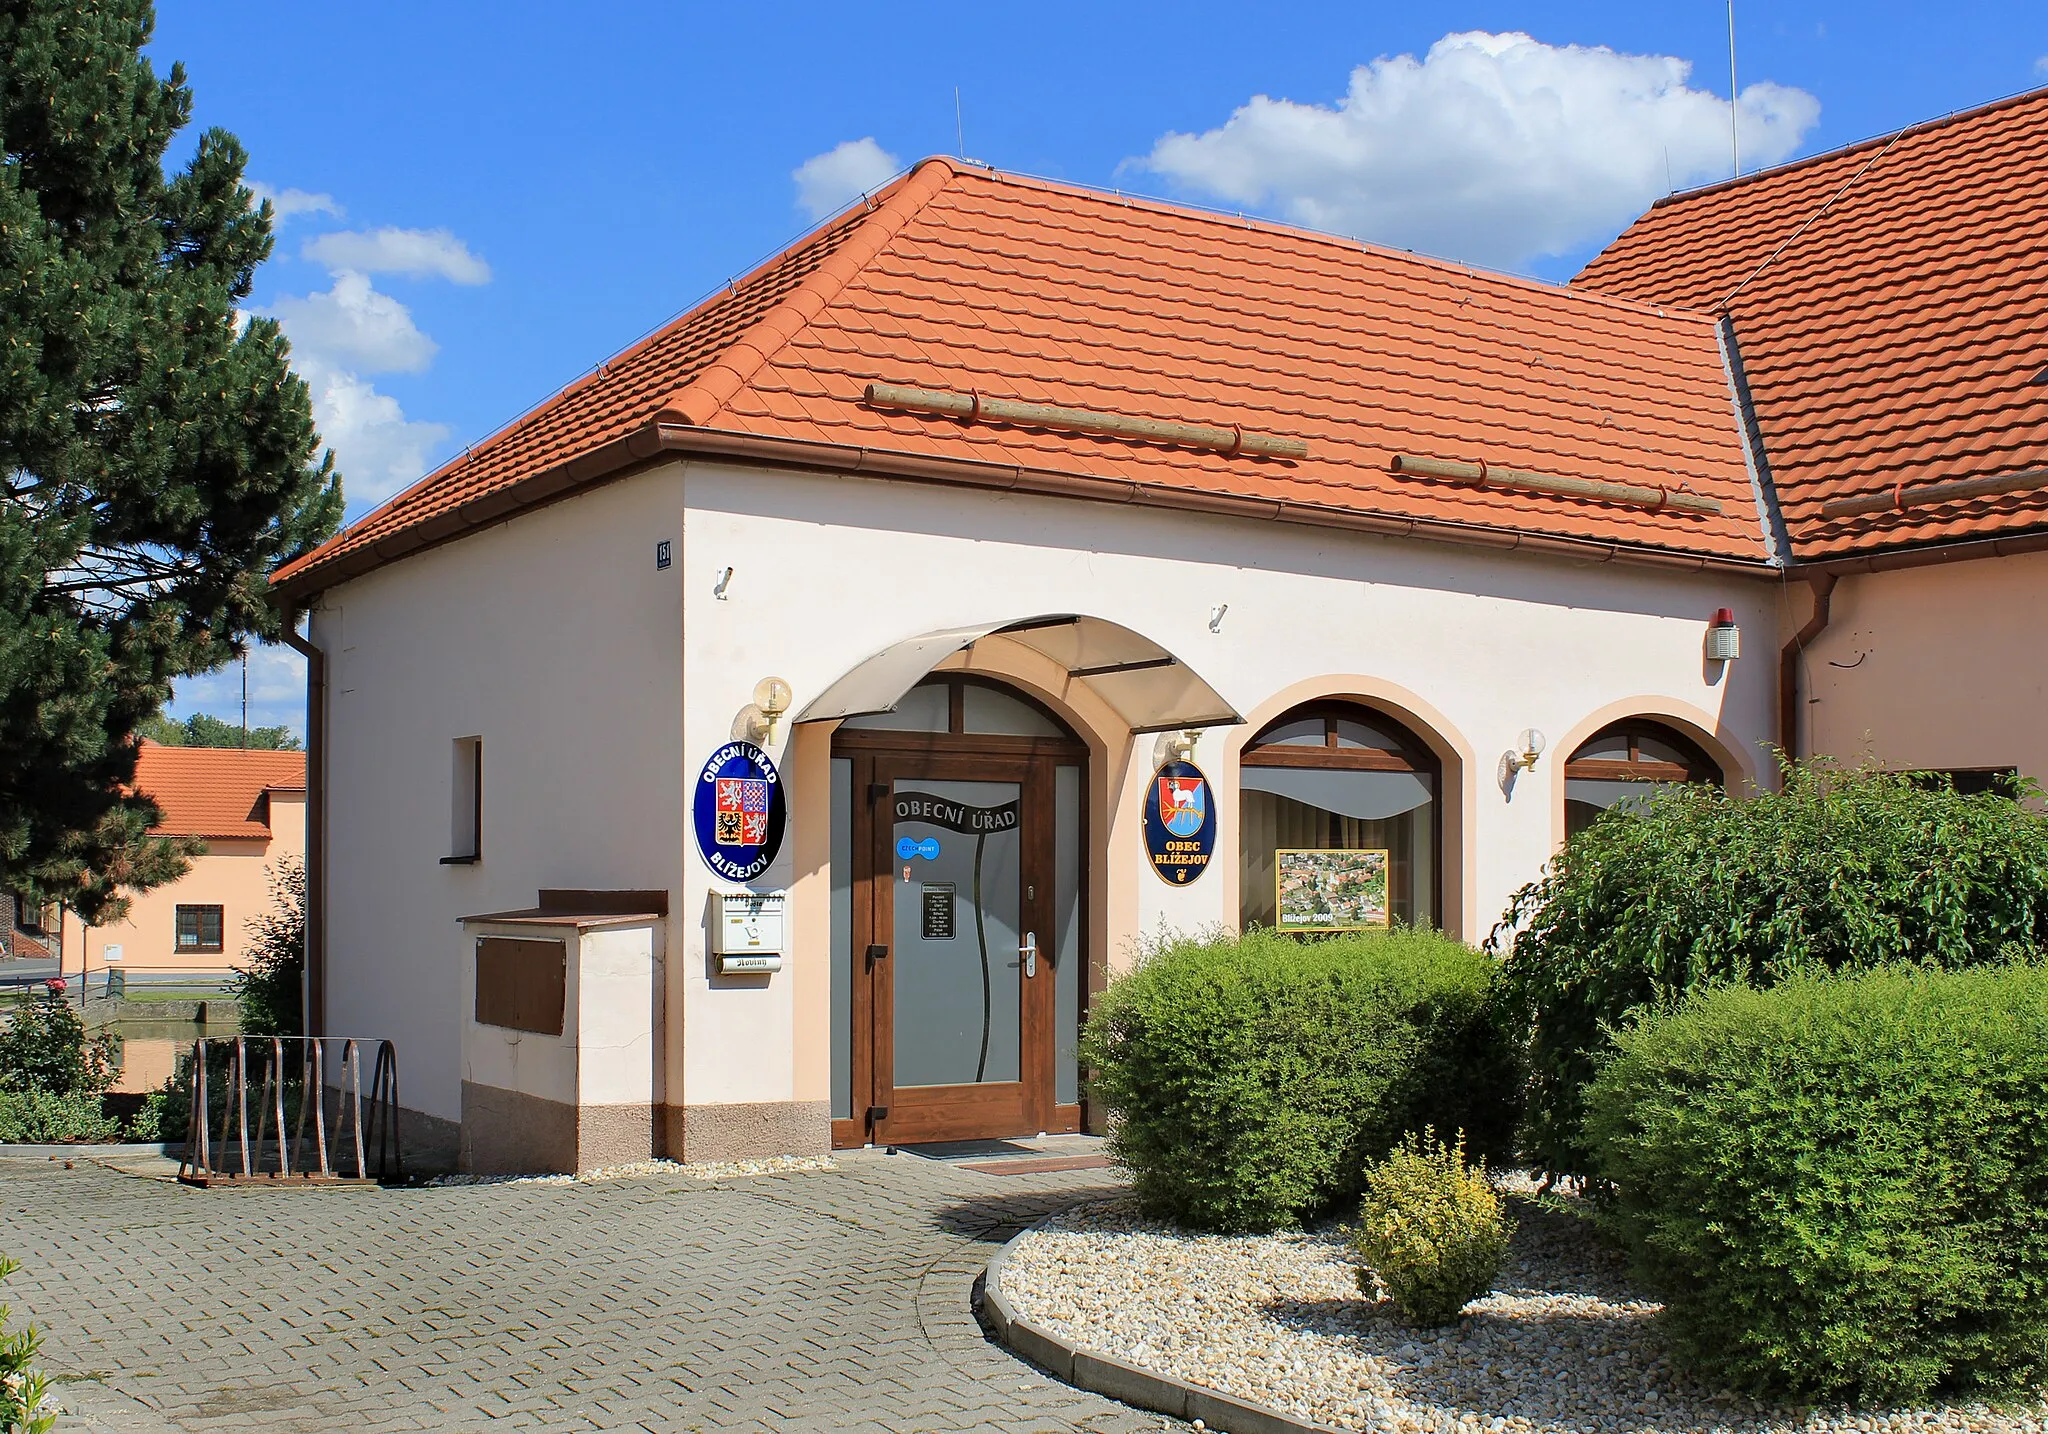 Photo showing: Municipal office in Blížejov, Czech Republic.